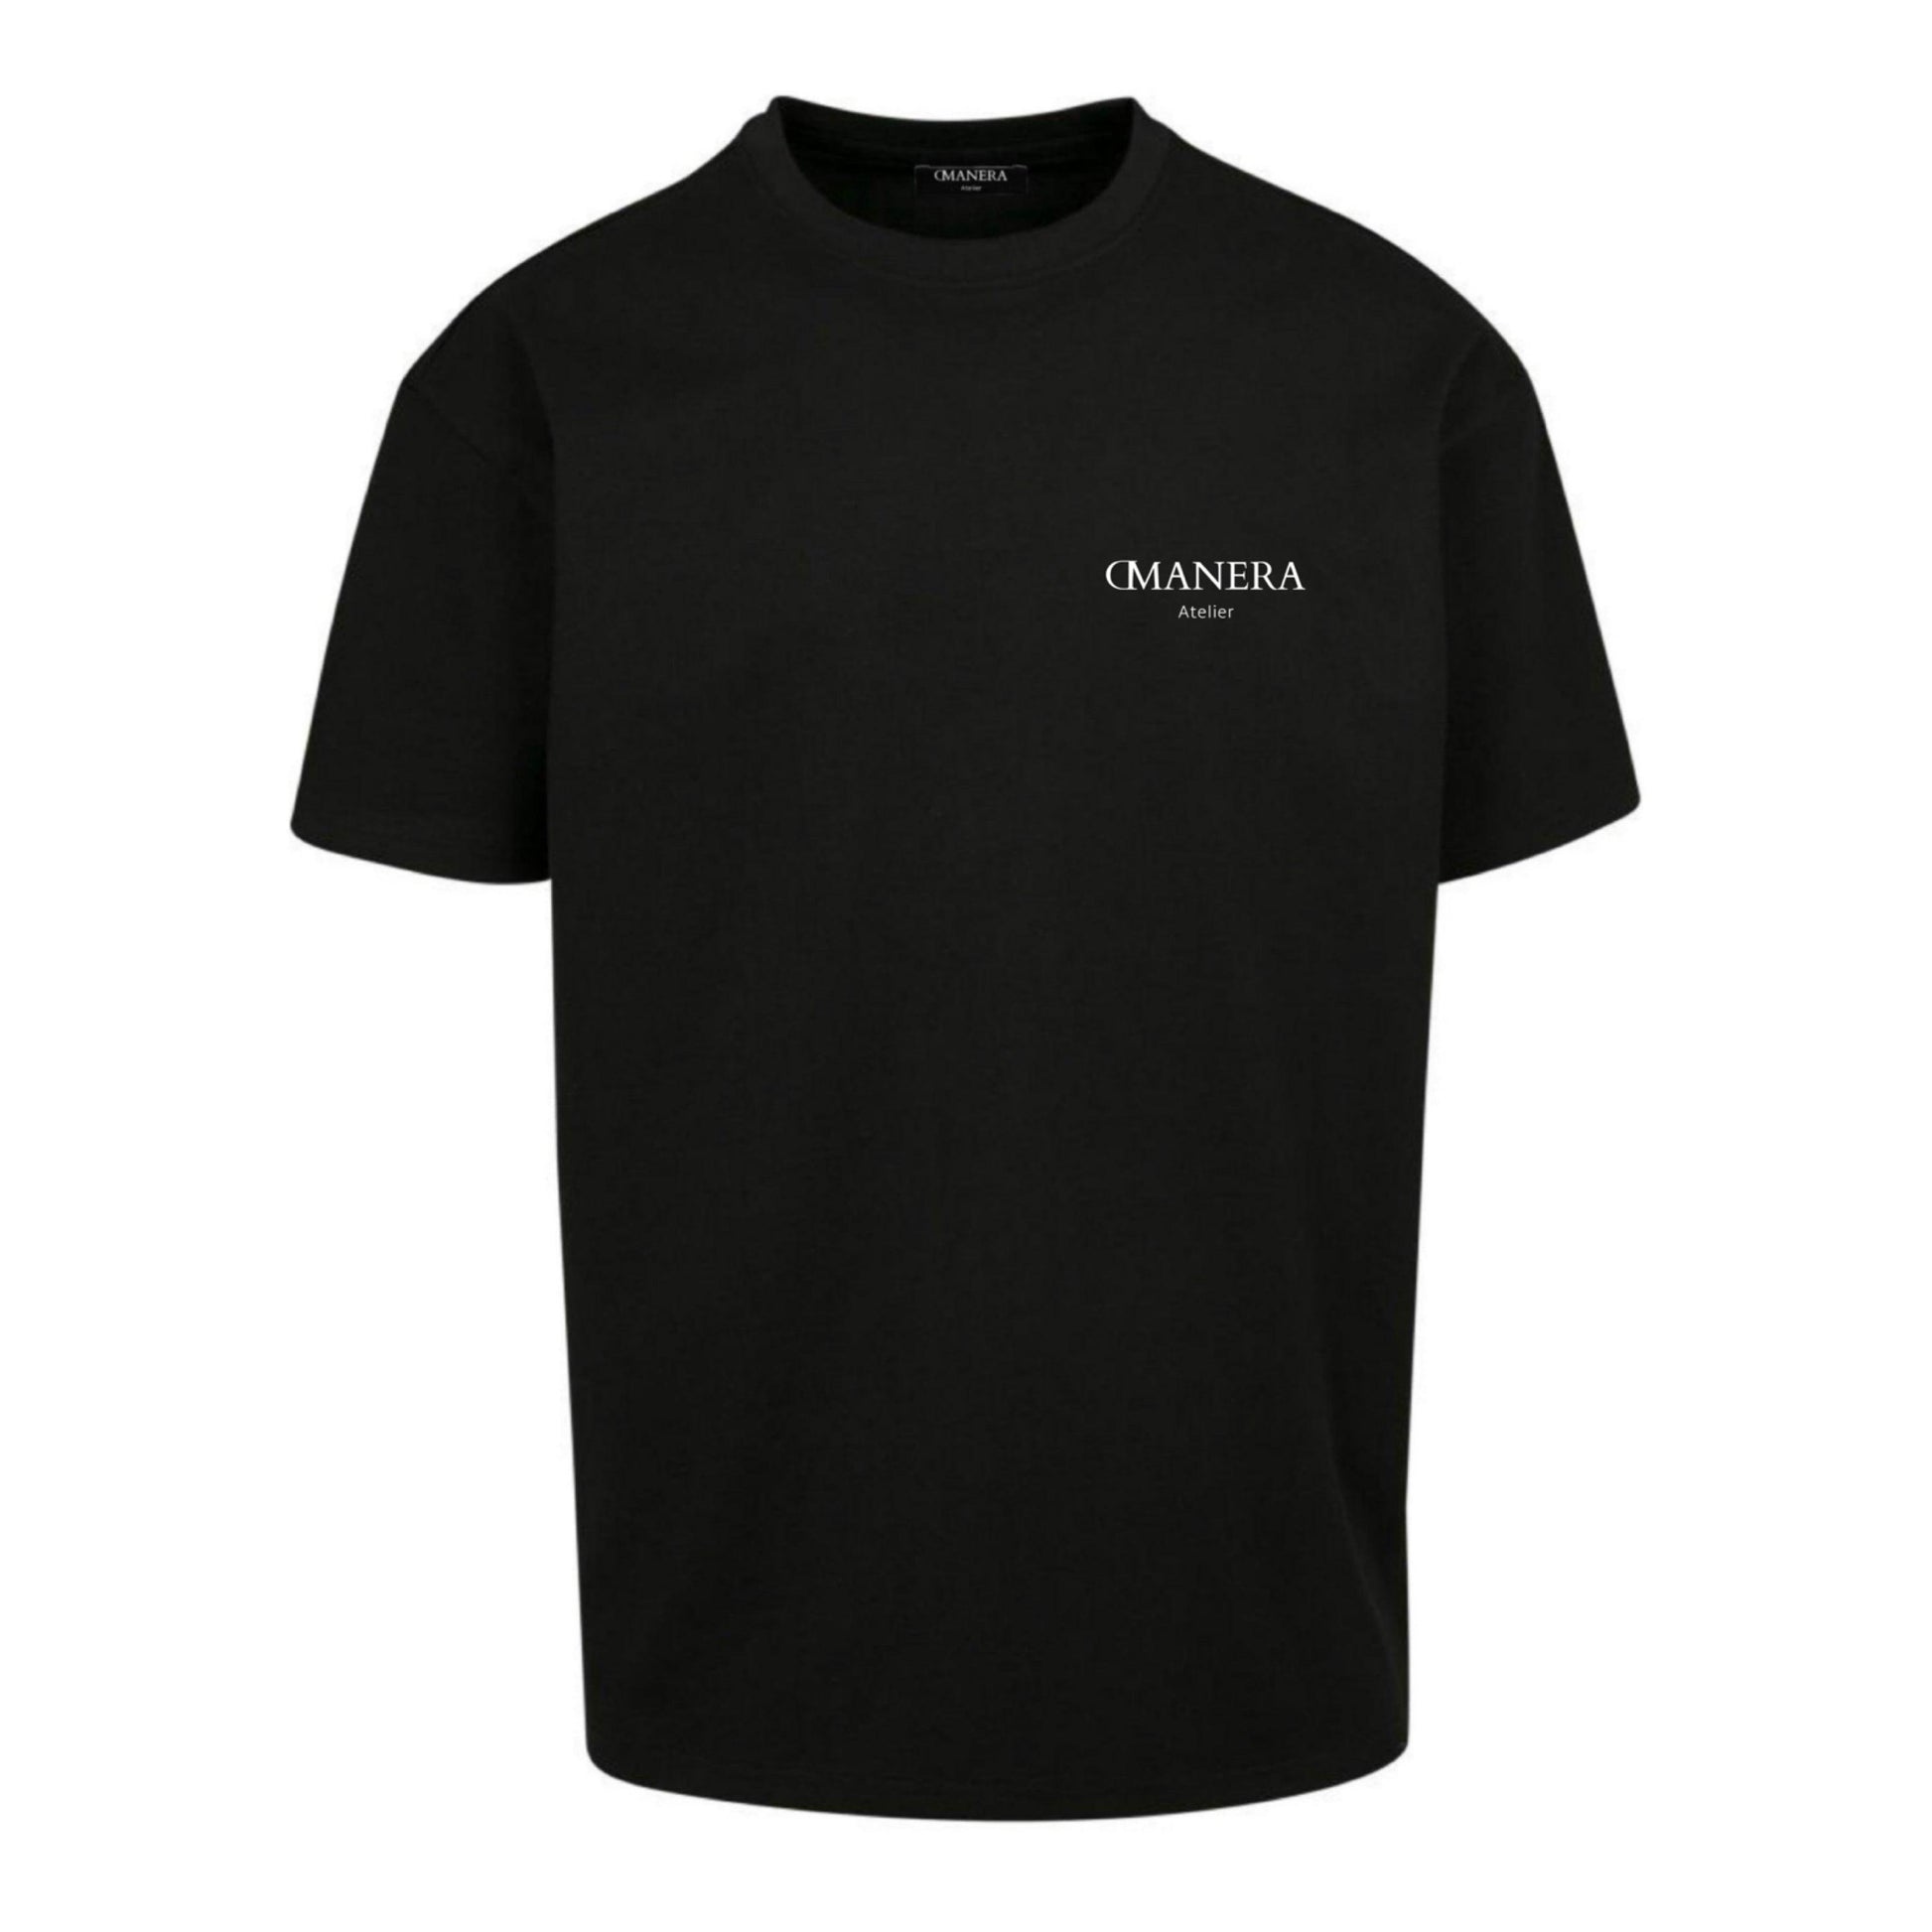 Premium Basic Shirt Black/White 190 g/m² - DMANERA Atelier